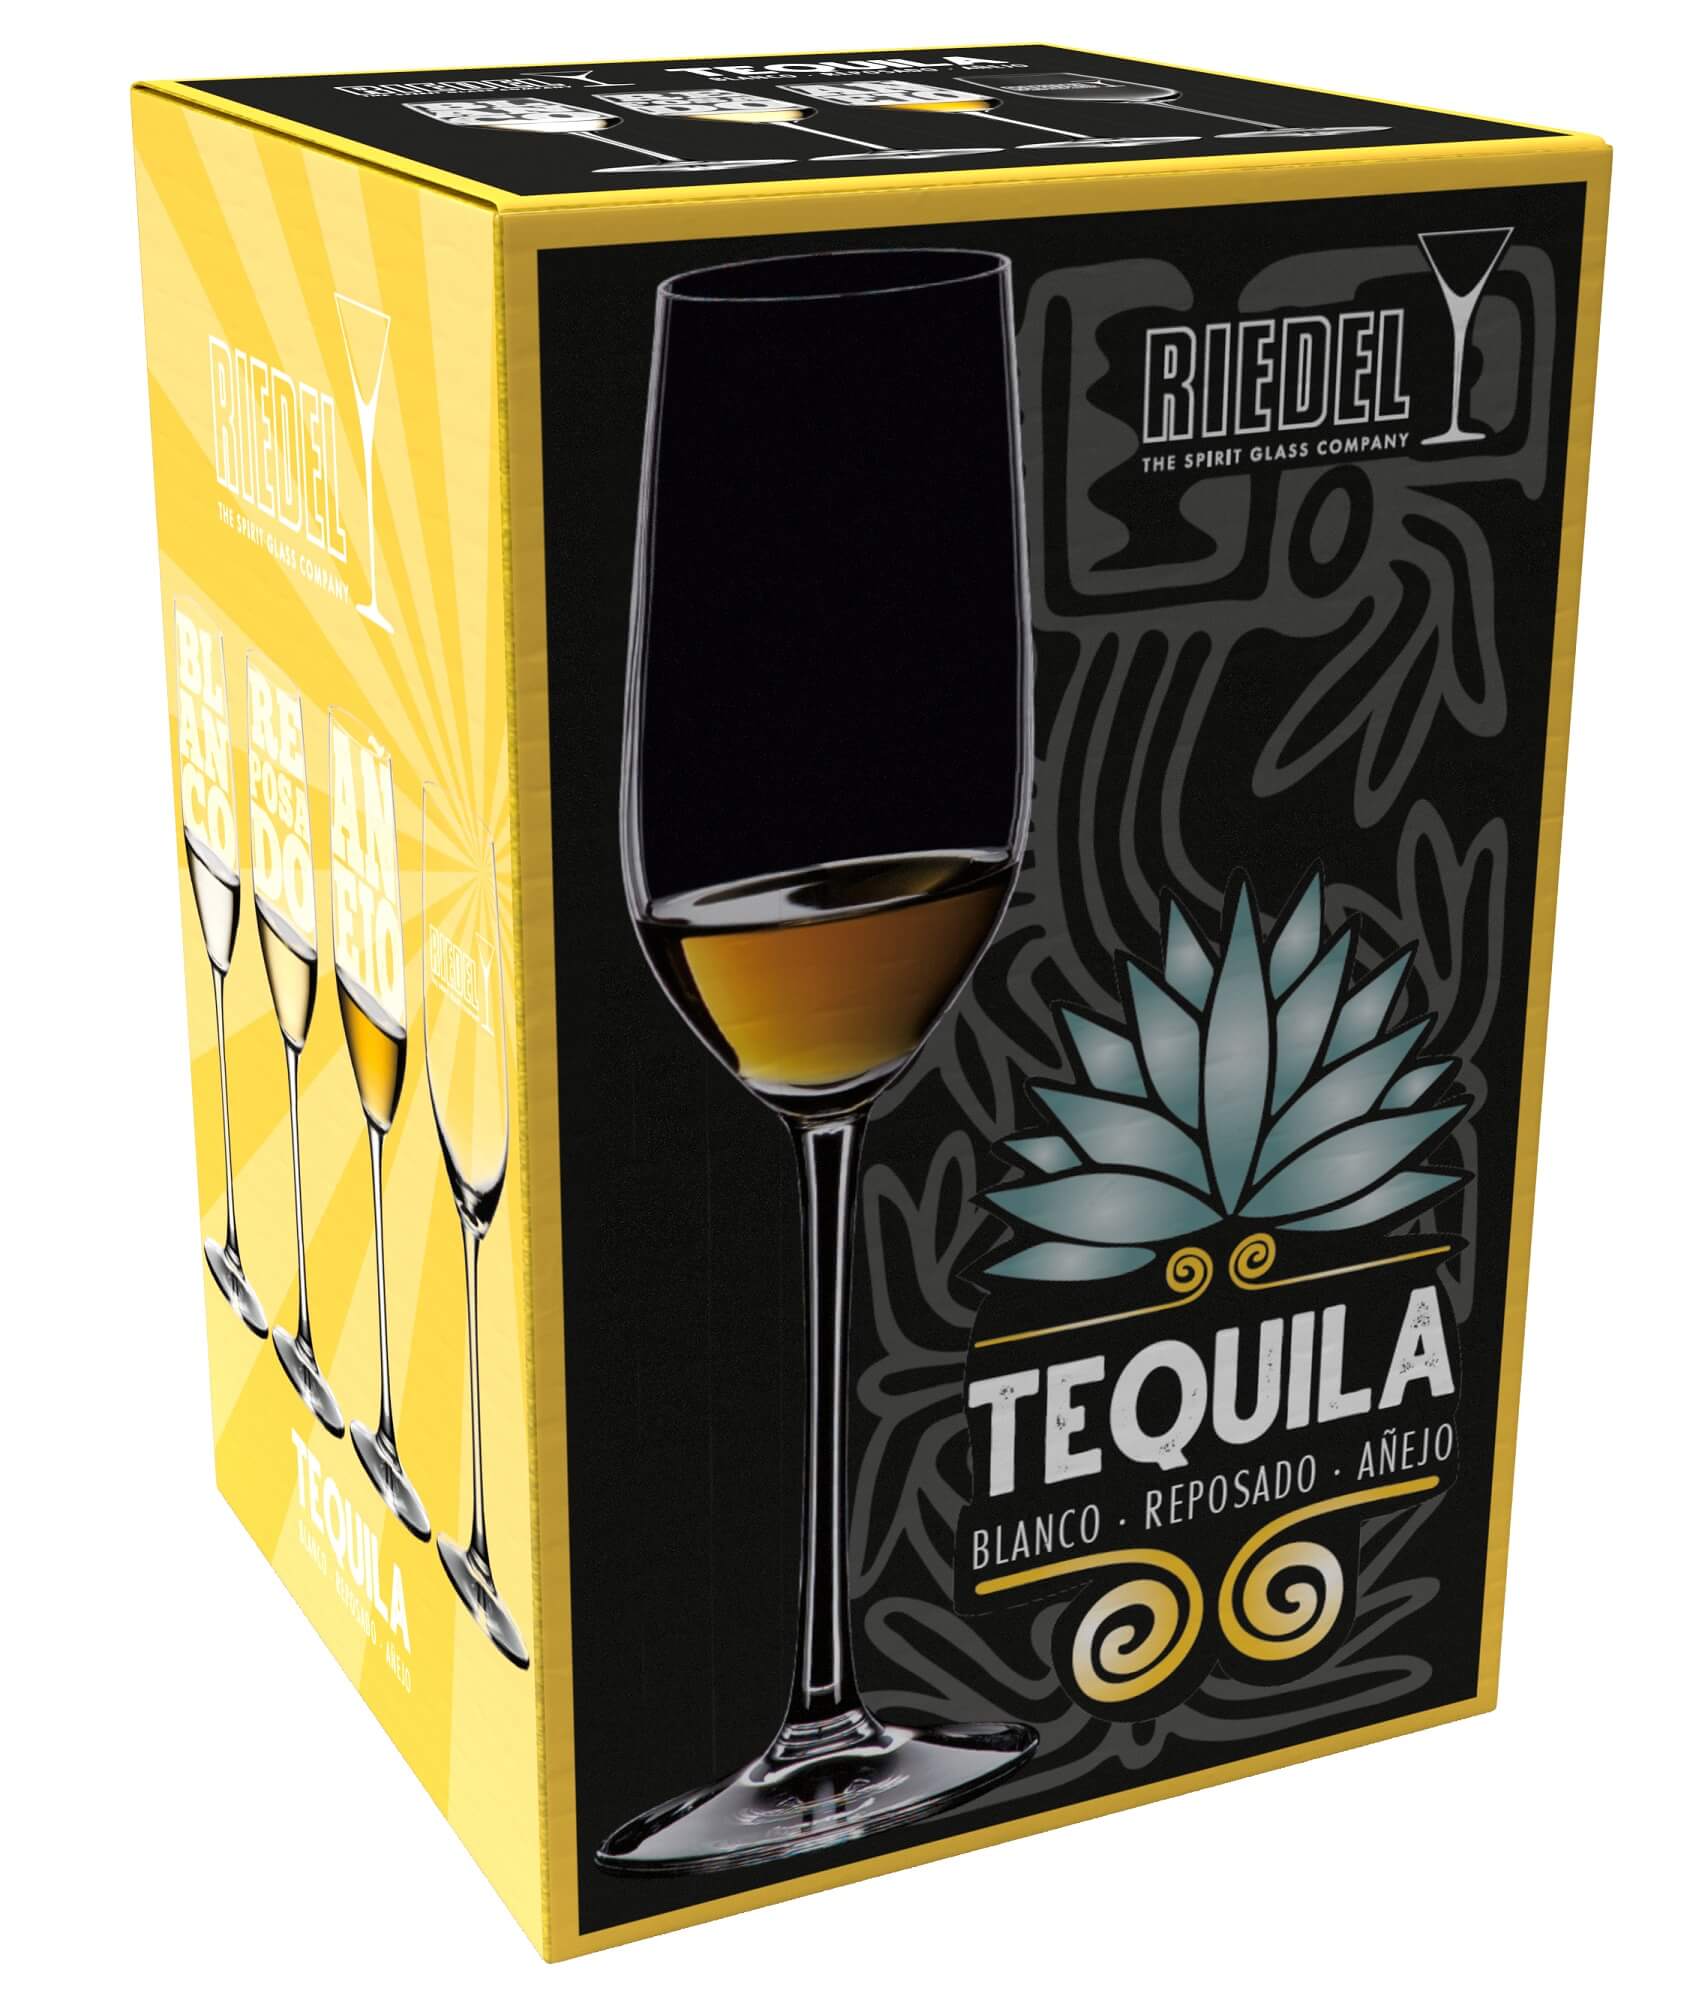 Tequila set, Riedel - 190ml (4 pcs.)